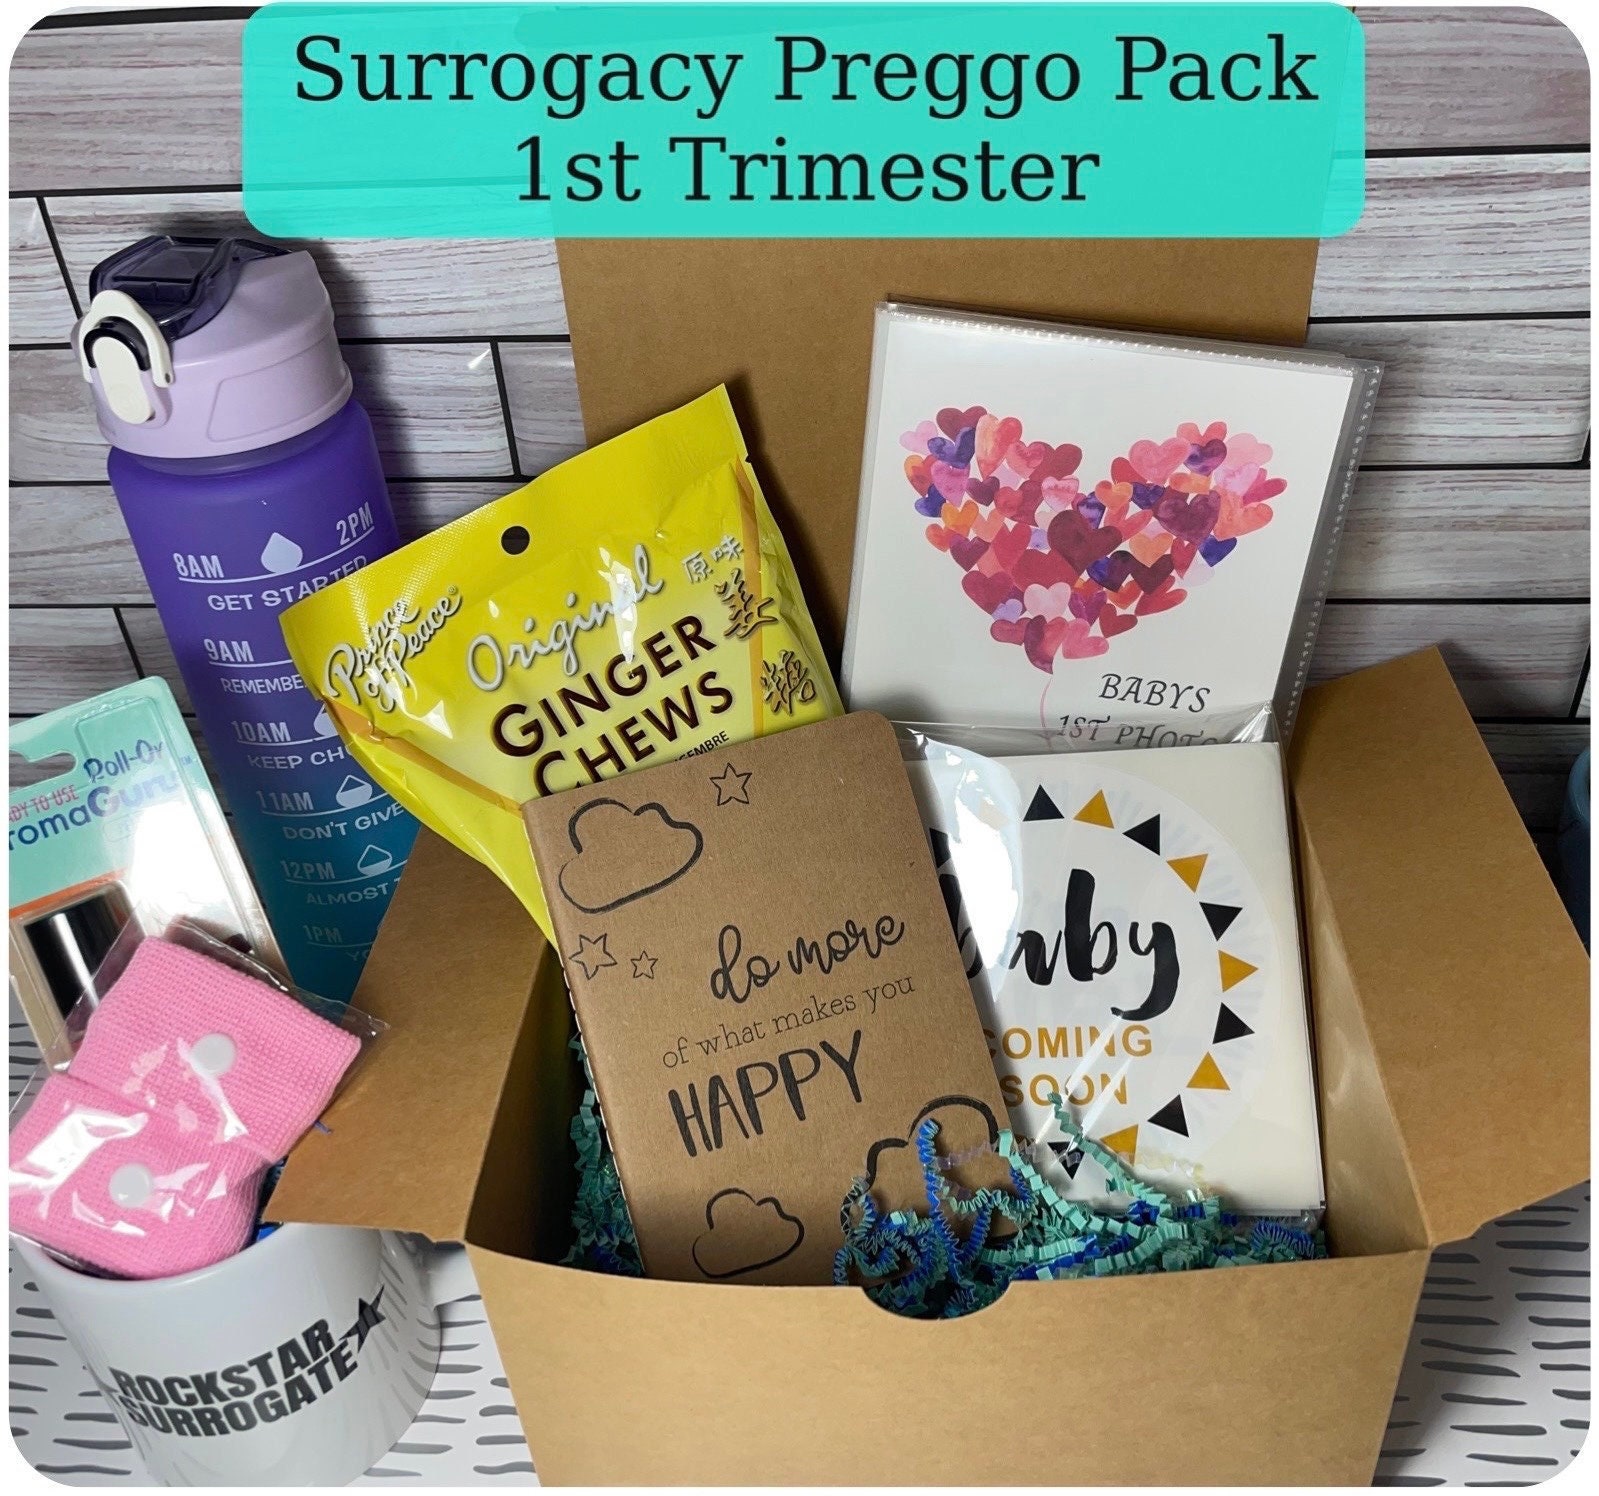 Surrogacy Pregnancy Gift Pack-1st Trimester 